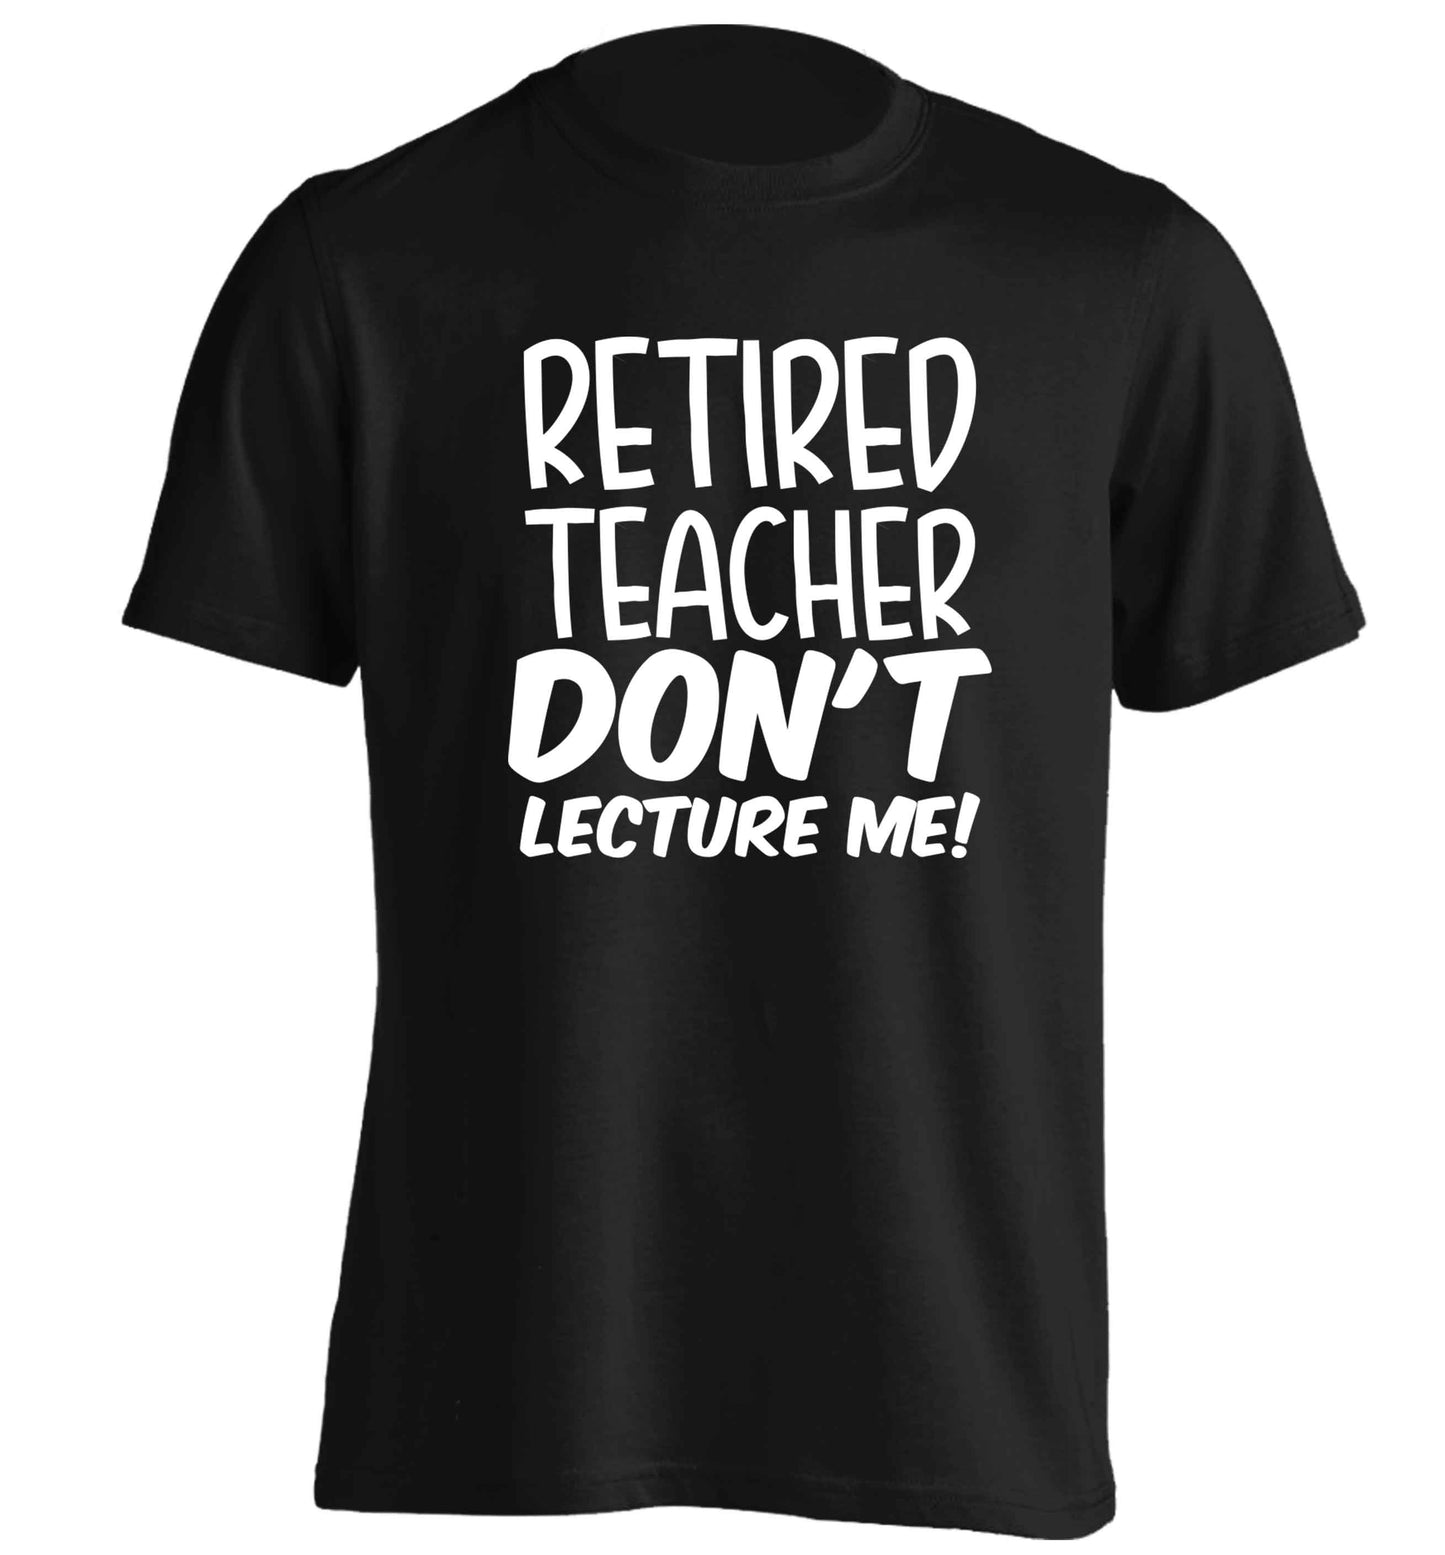 Retired teacher don't lecture me! adults unisex black Tshirt 2XL